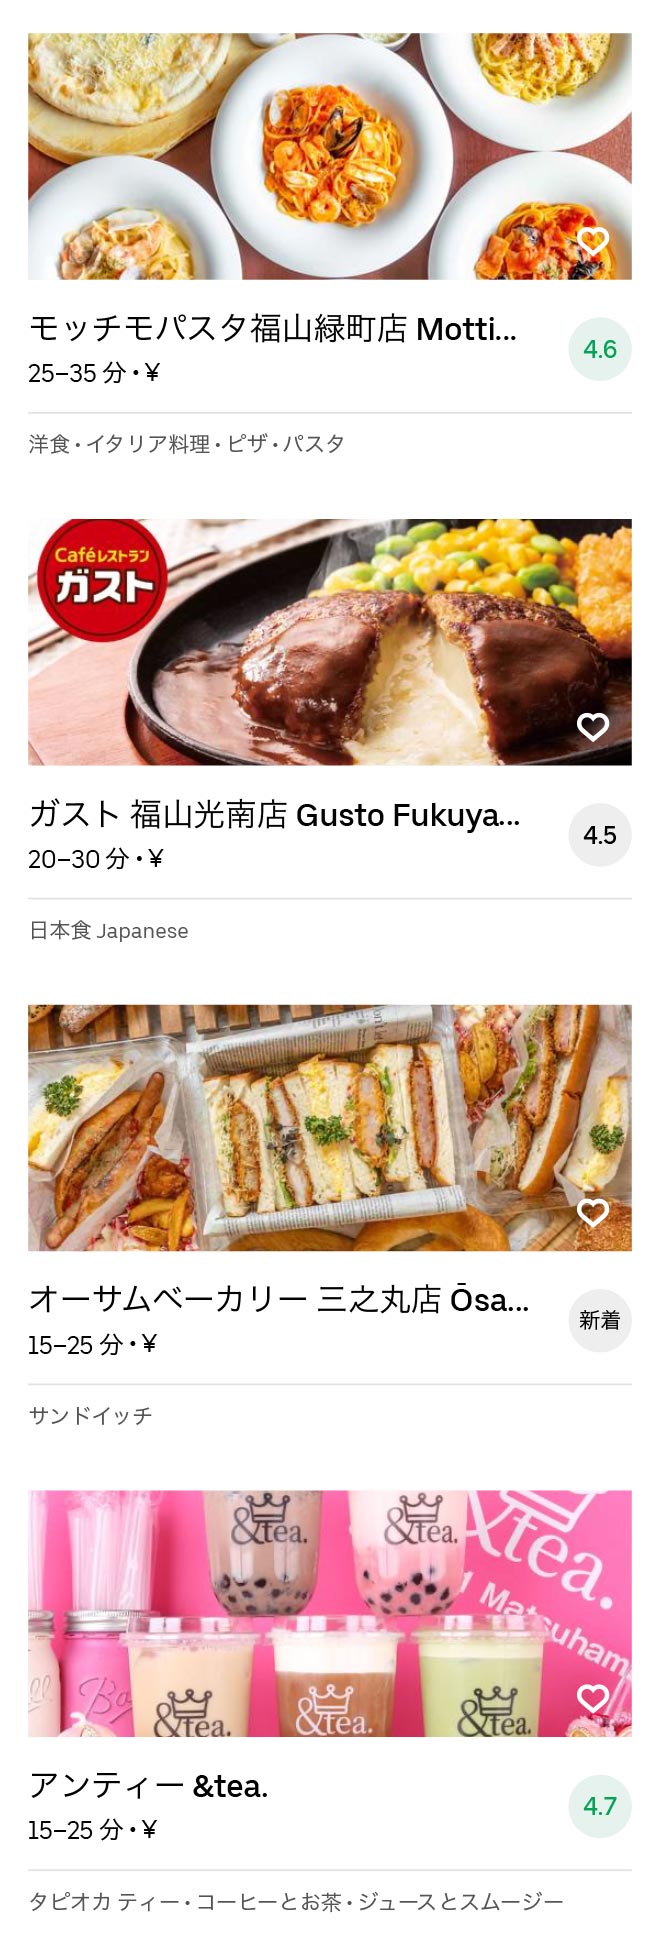 Fukuyama menu 2010 06